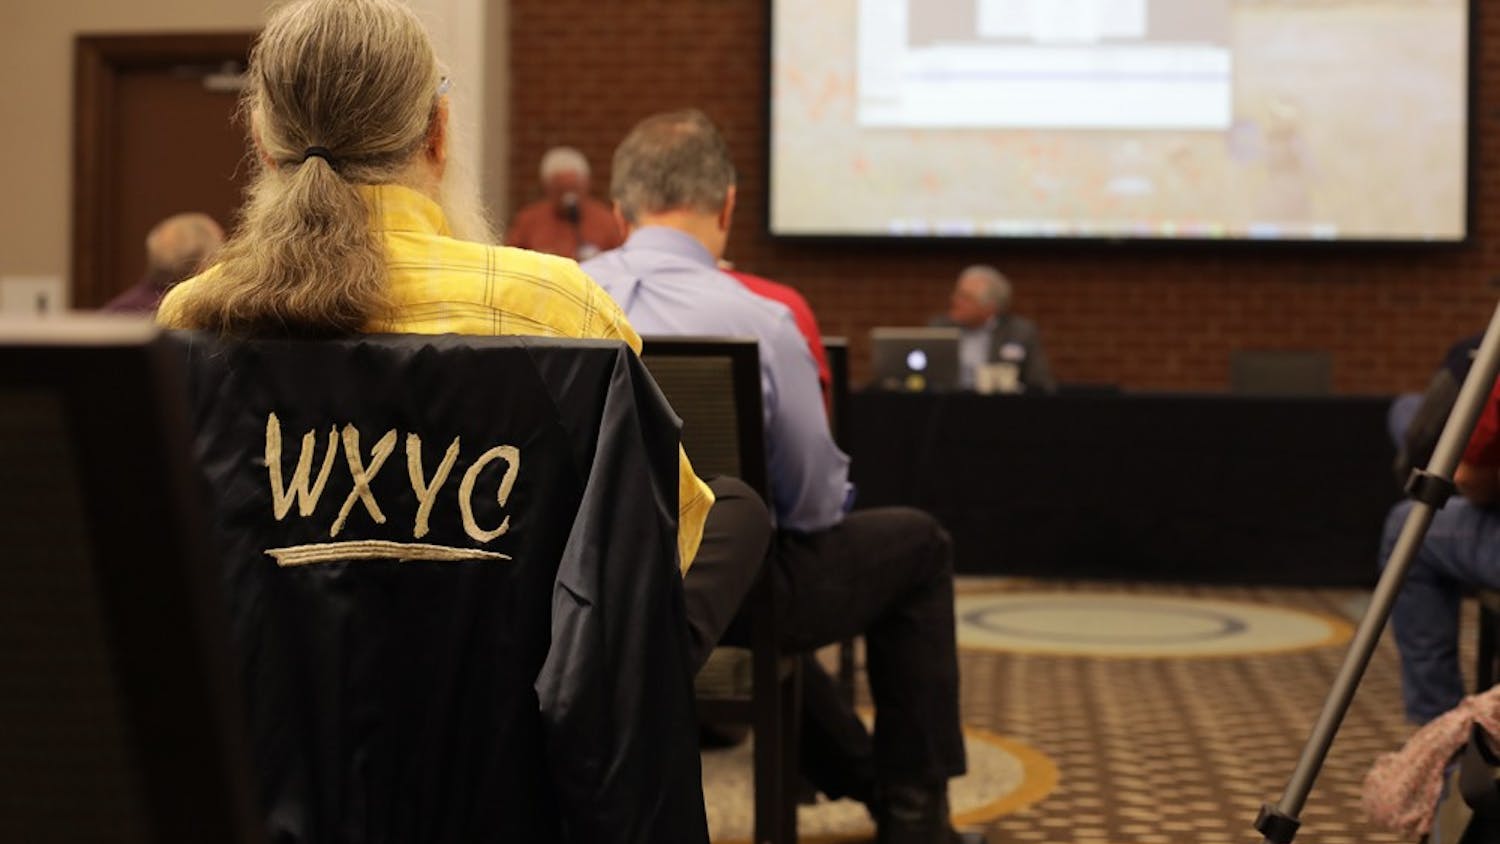 WXYC and WCAR alumni held a reunion in the Carrboro Hampton Inn & Suites Saturday.